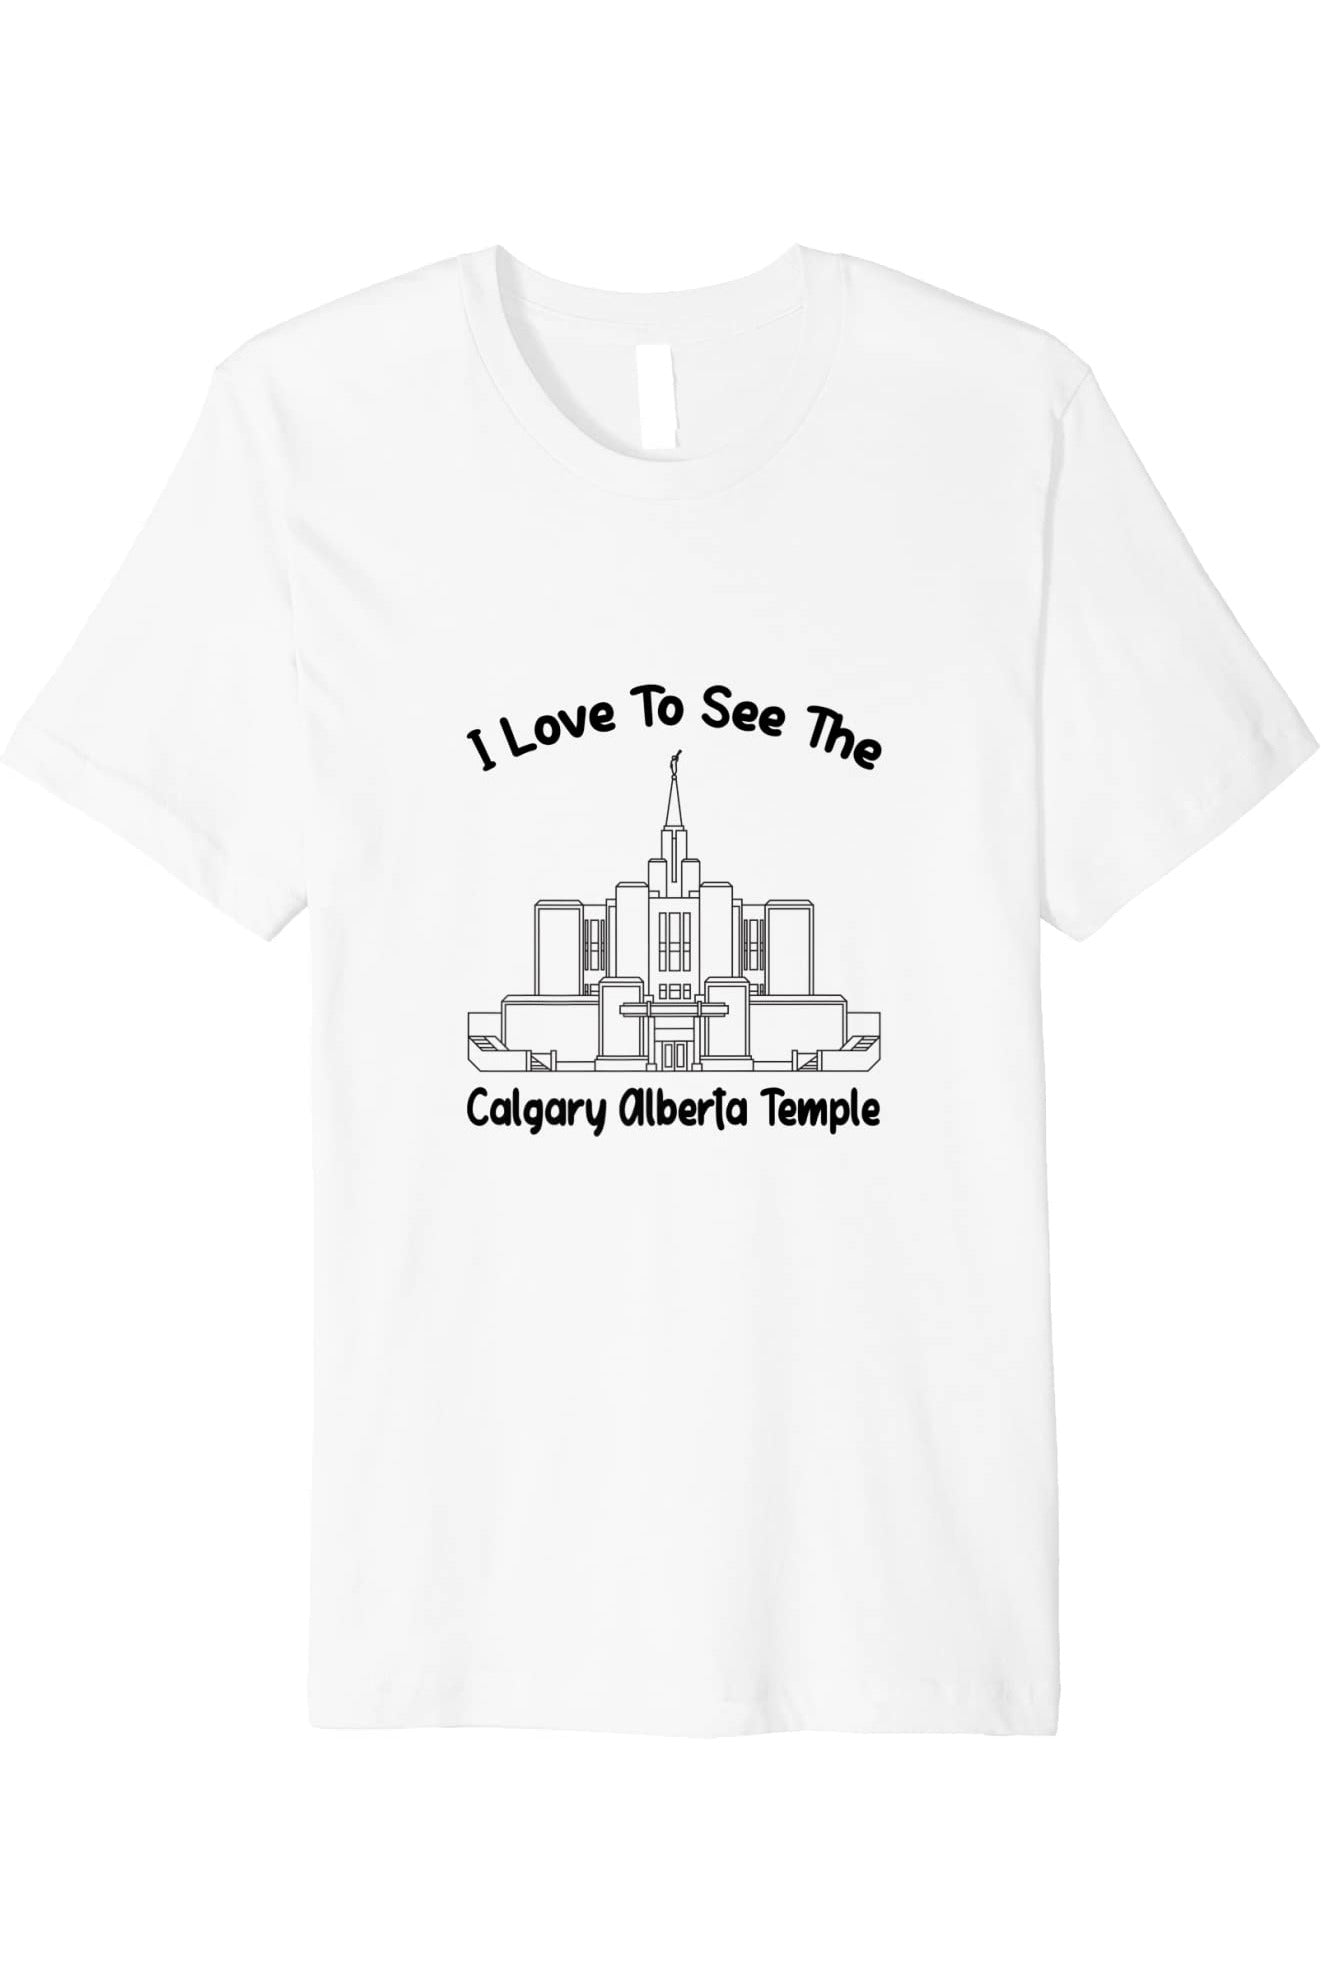 Calgary Alberta Temple T-Shirt - Premium - Primary Style (English) US